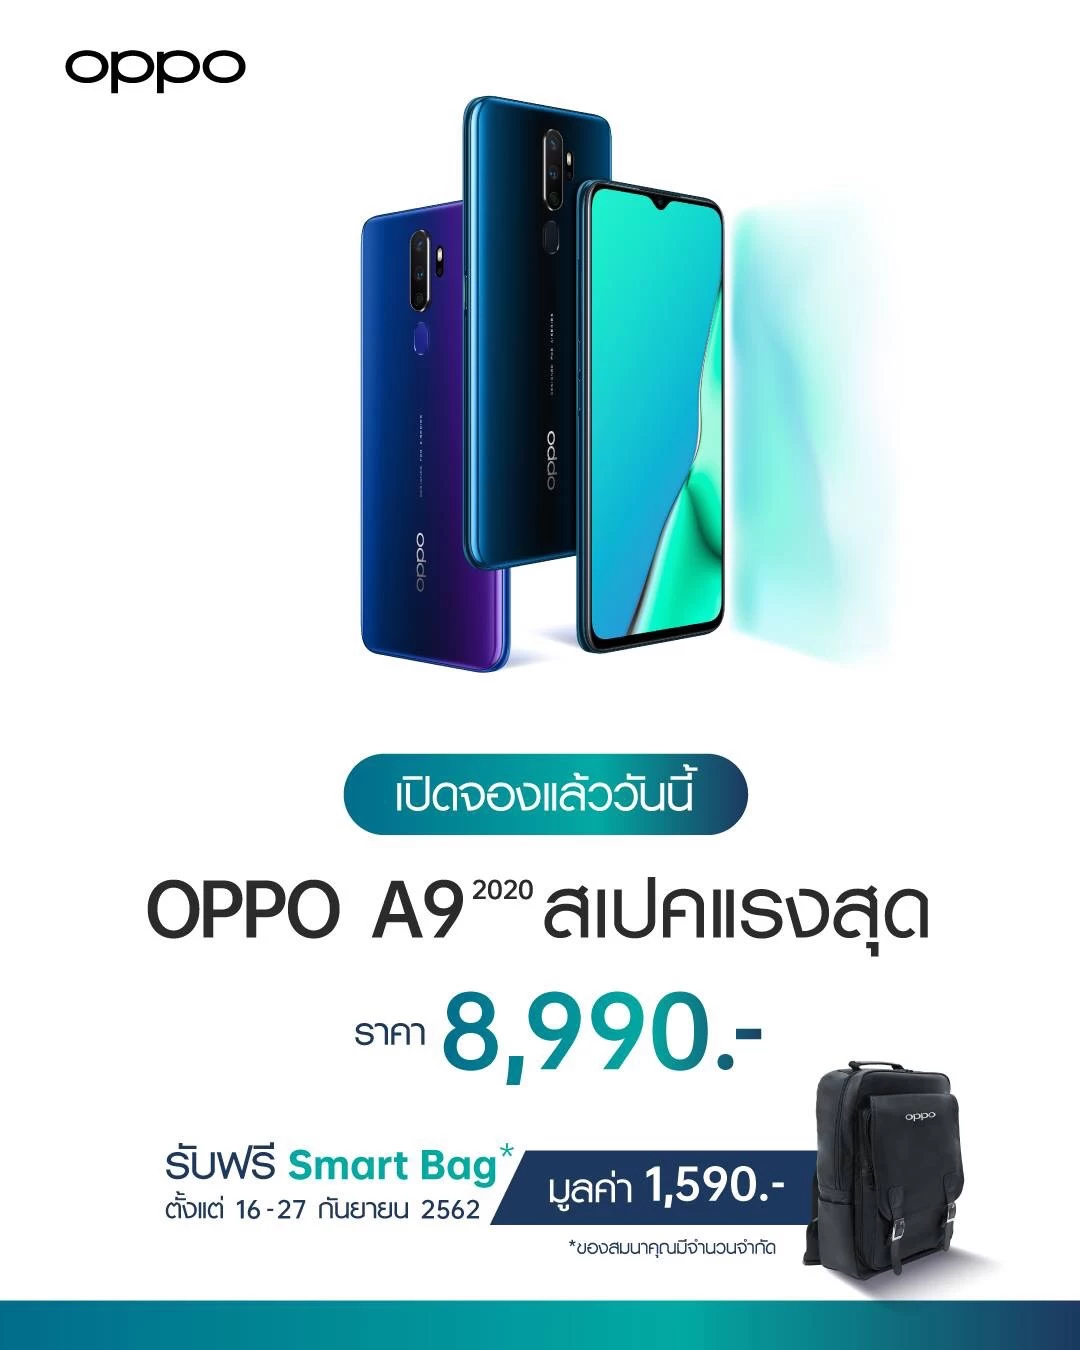 S 20144132 | OPPO | จับจุดเด่น OPPO A9 2020 สมาร์ทโฟนสเปคแรงสุดจาก Series A ในราคาหลักพัน